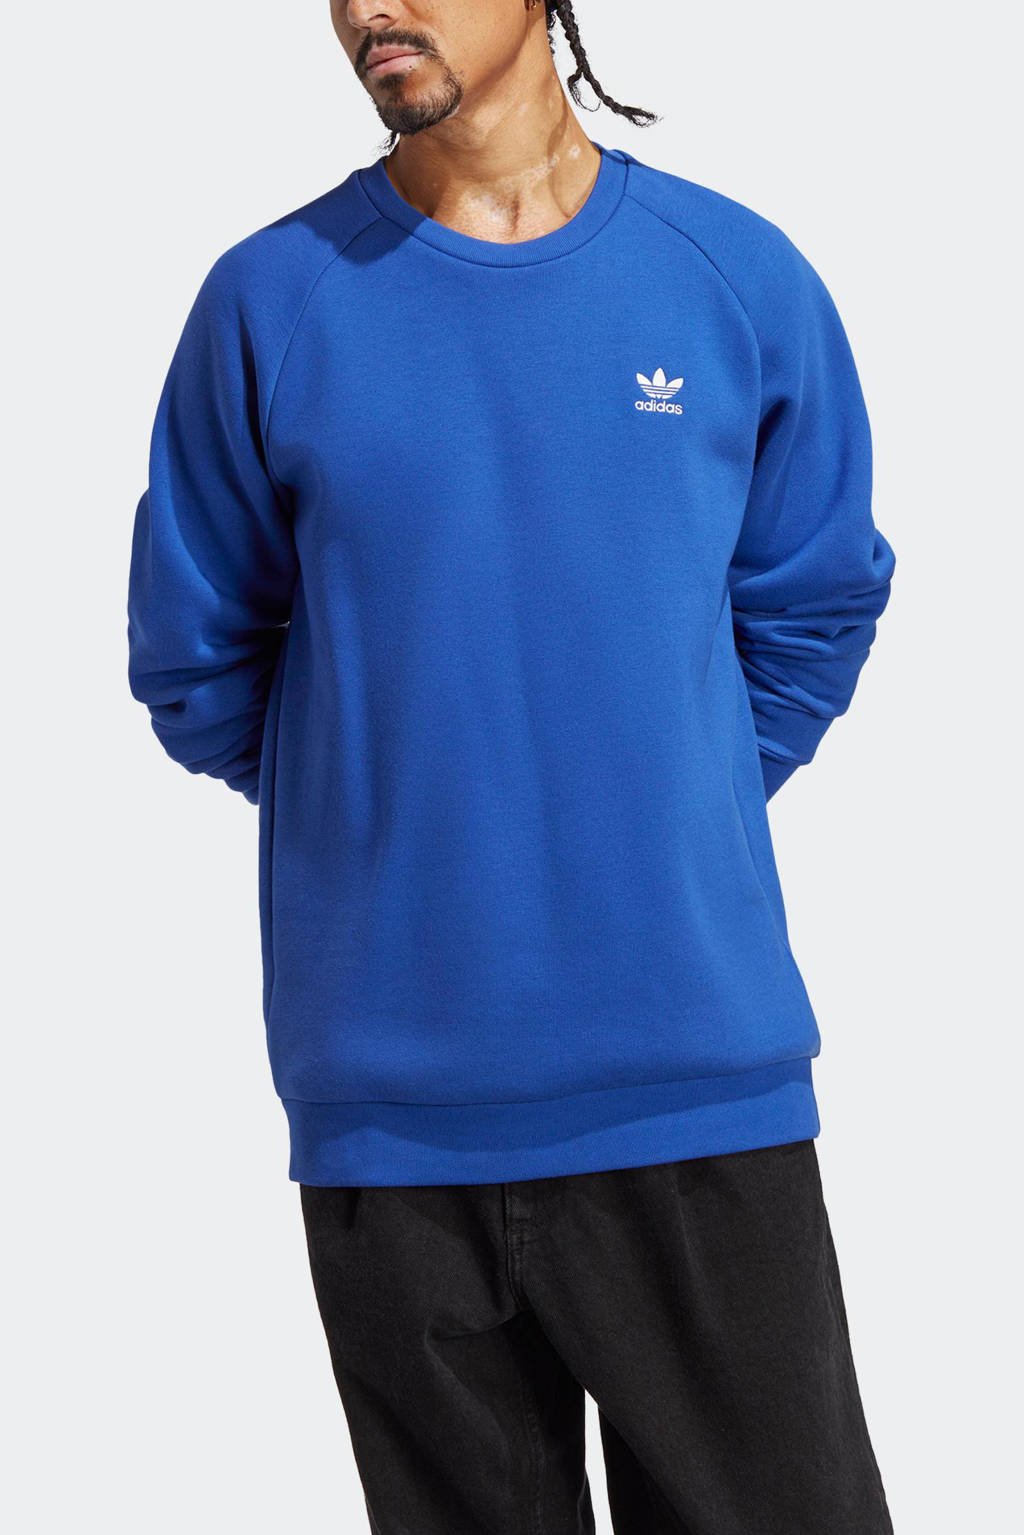 Originals sweater blauw wehkamp